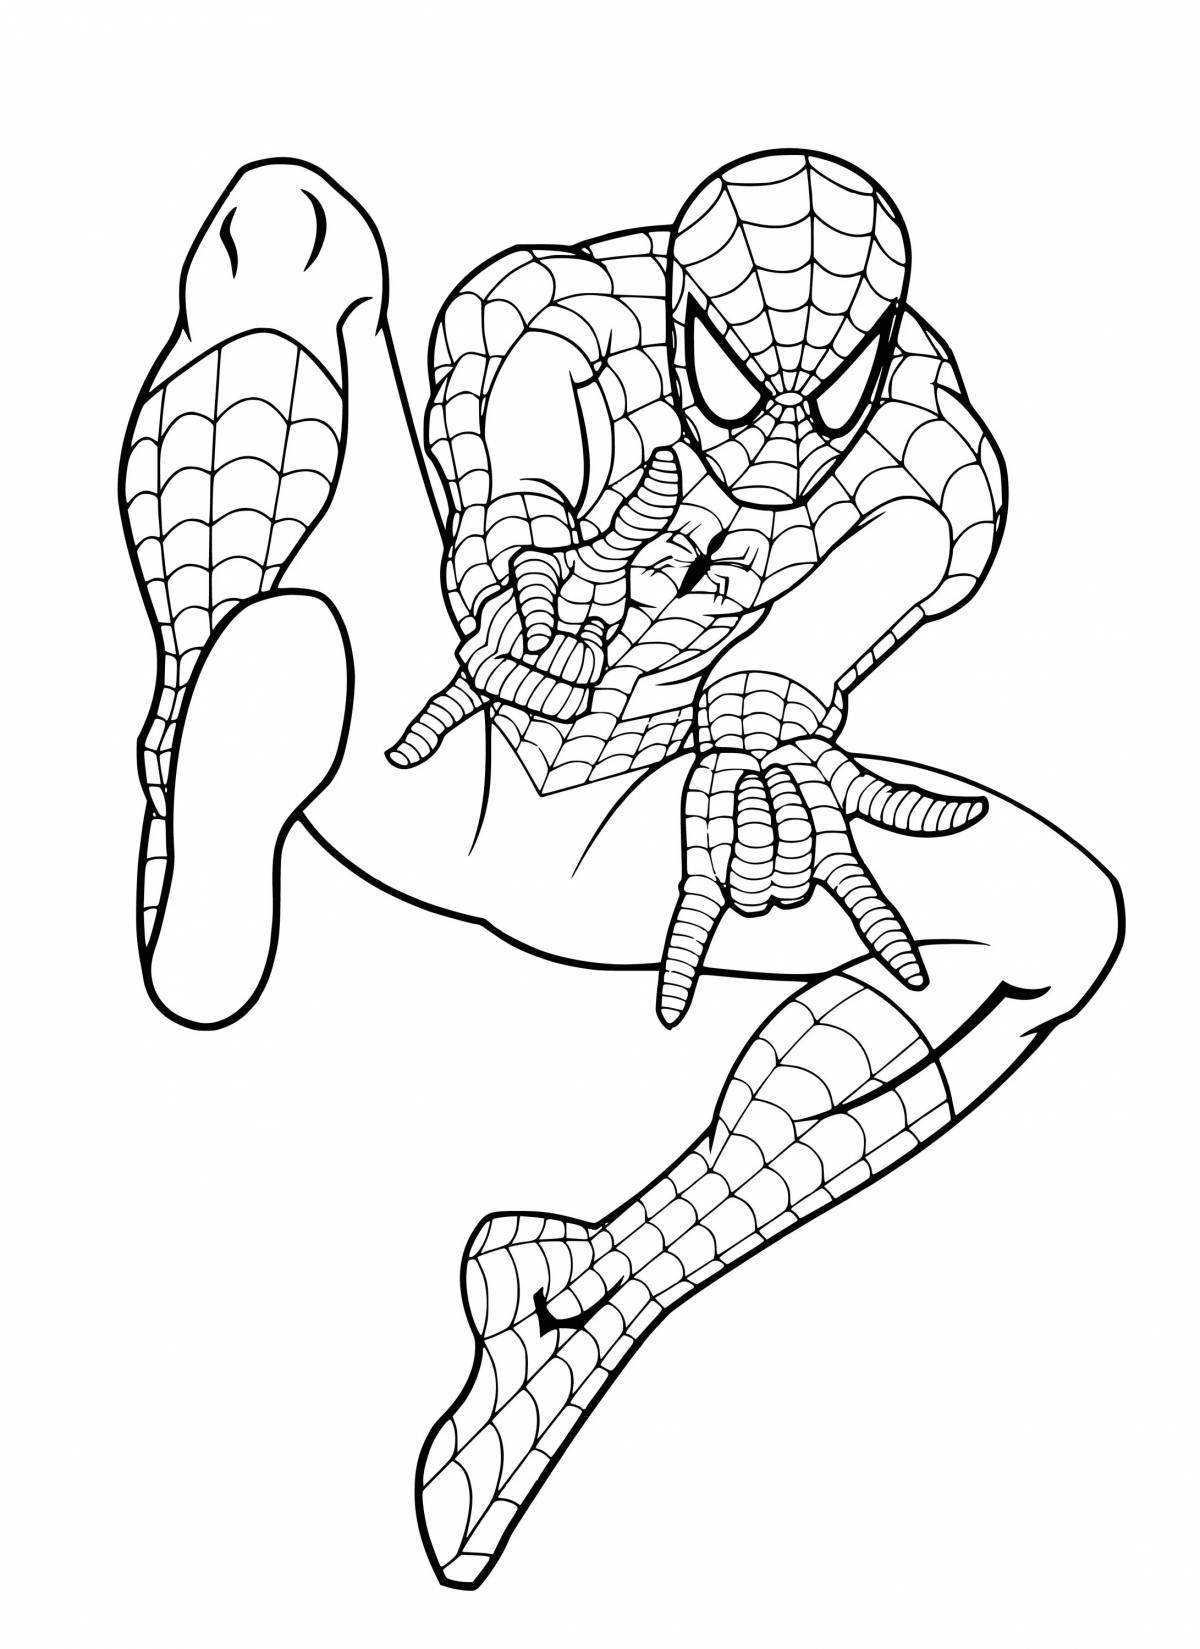 Sweet Spiderman antistress coloring book